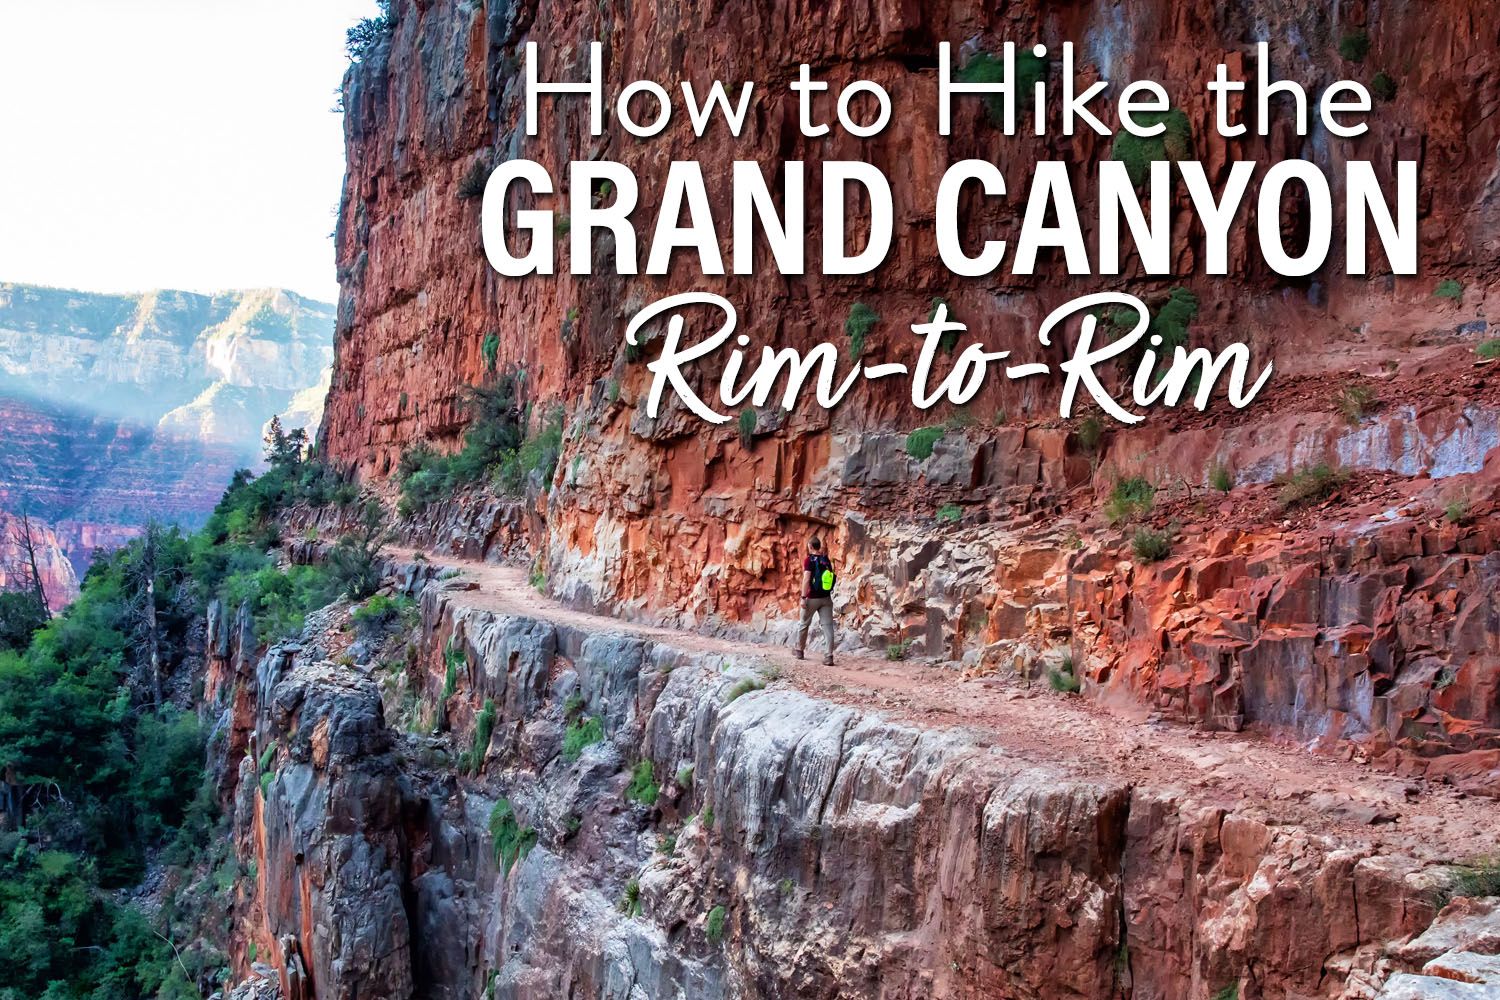 Grand Canyon Rim-to-Rim